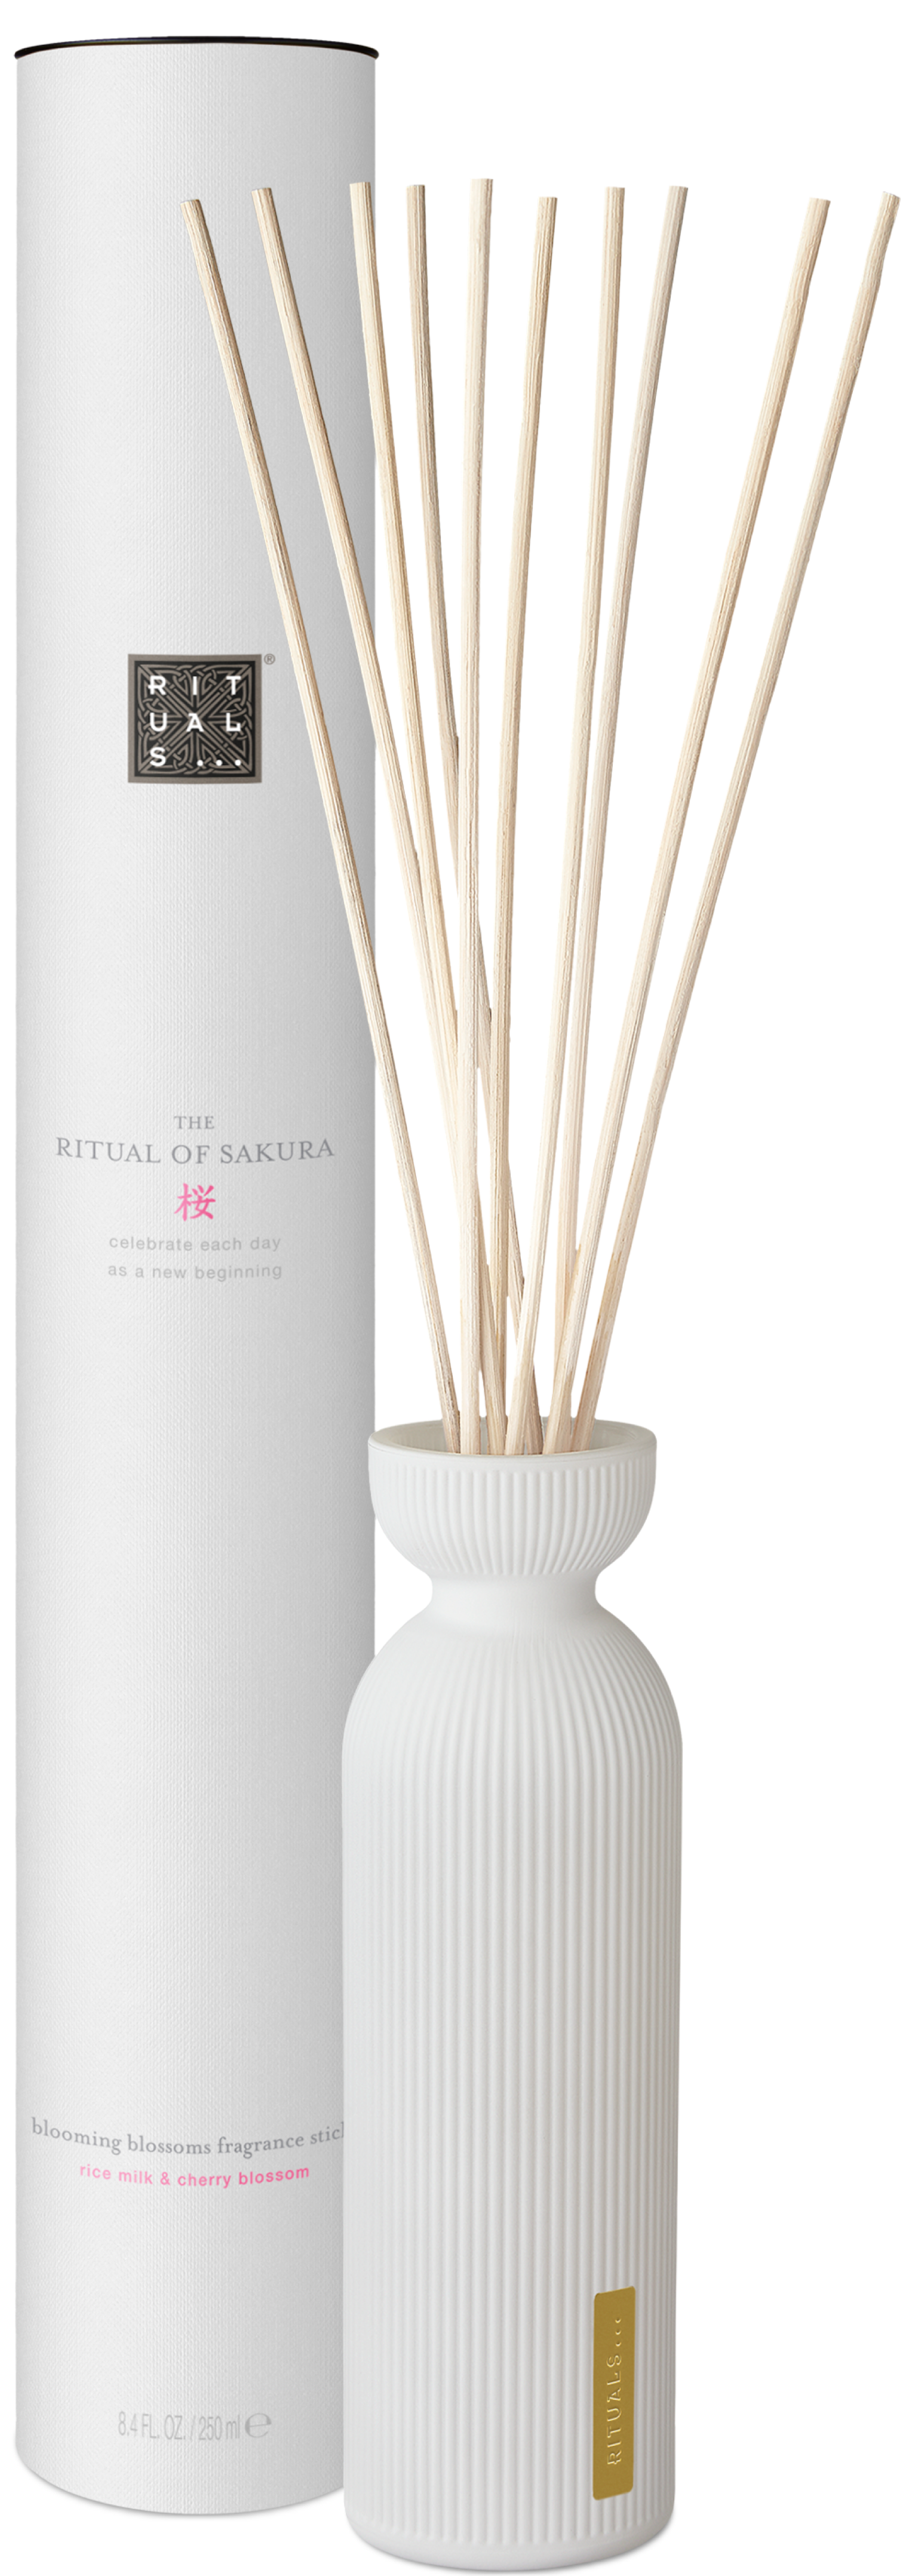 Buy Rituals The Ritual of Karma Refill Fragrance Sticks Refill